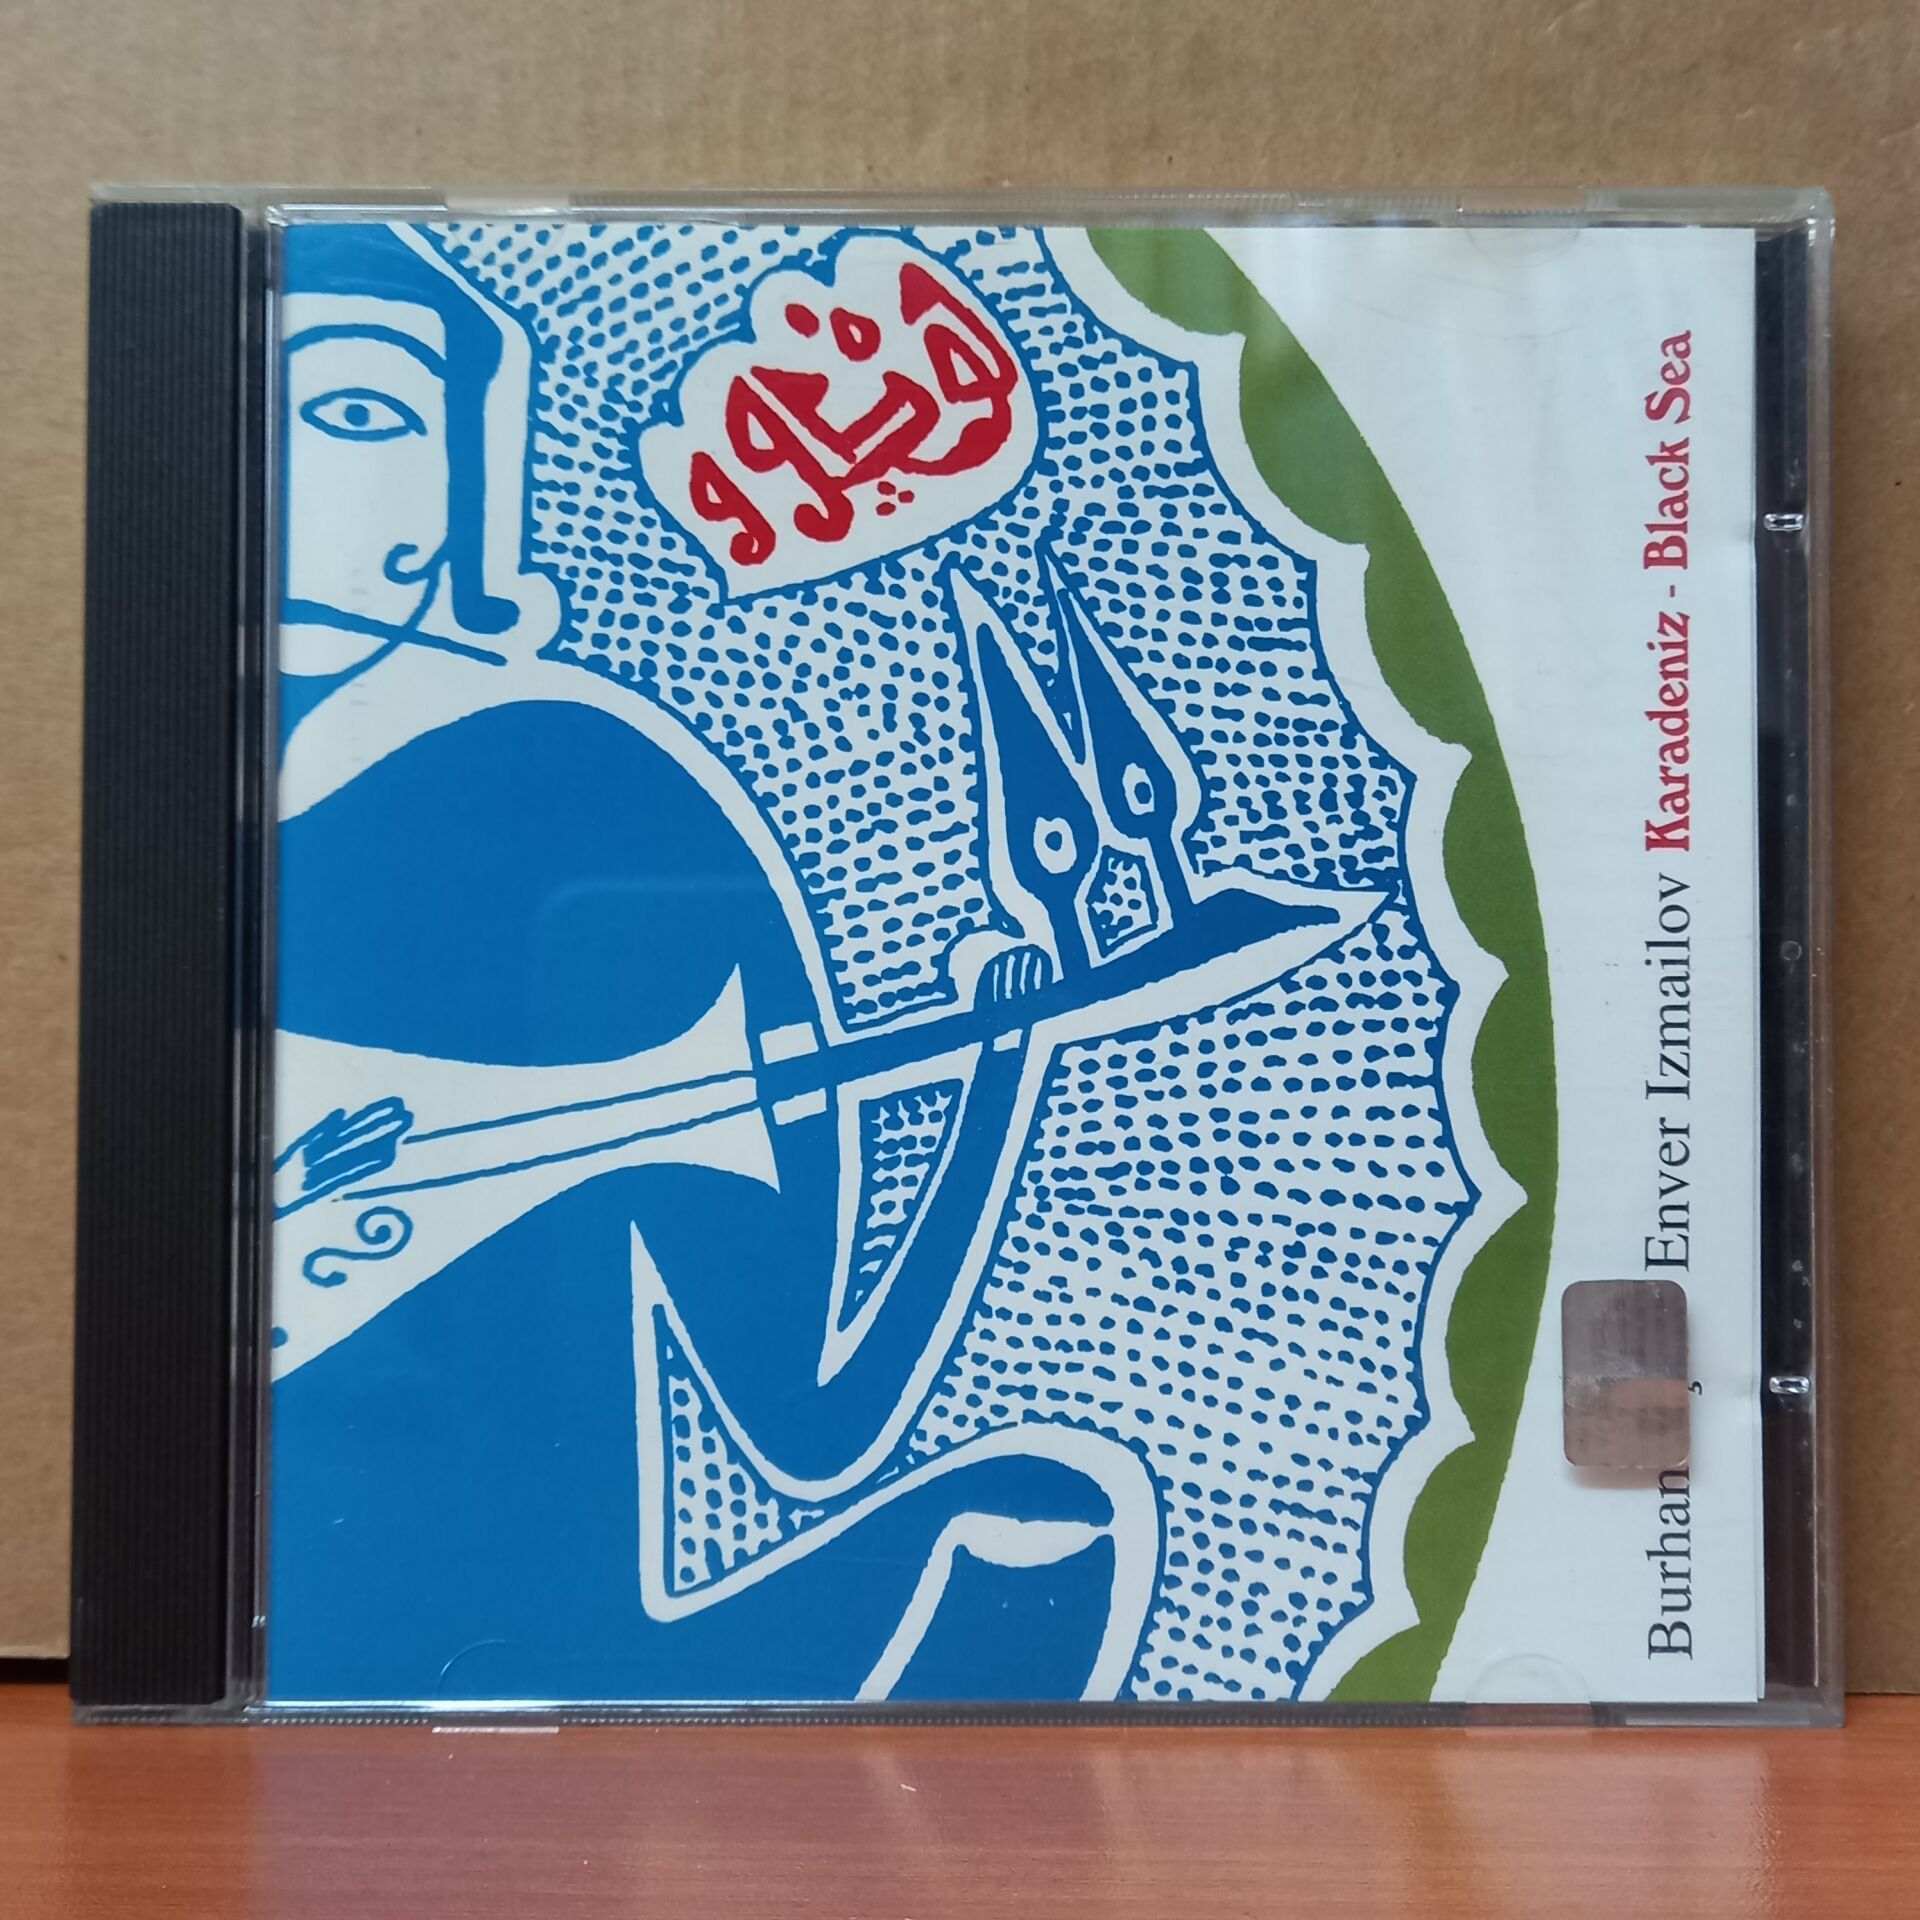 BURHAN ÖÇAL & ENVER IZMAILOV - KARADENİZ - CD 2.EL